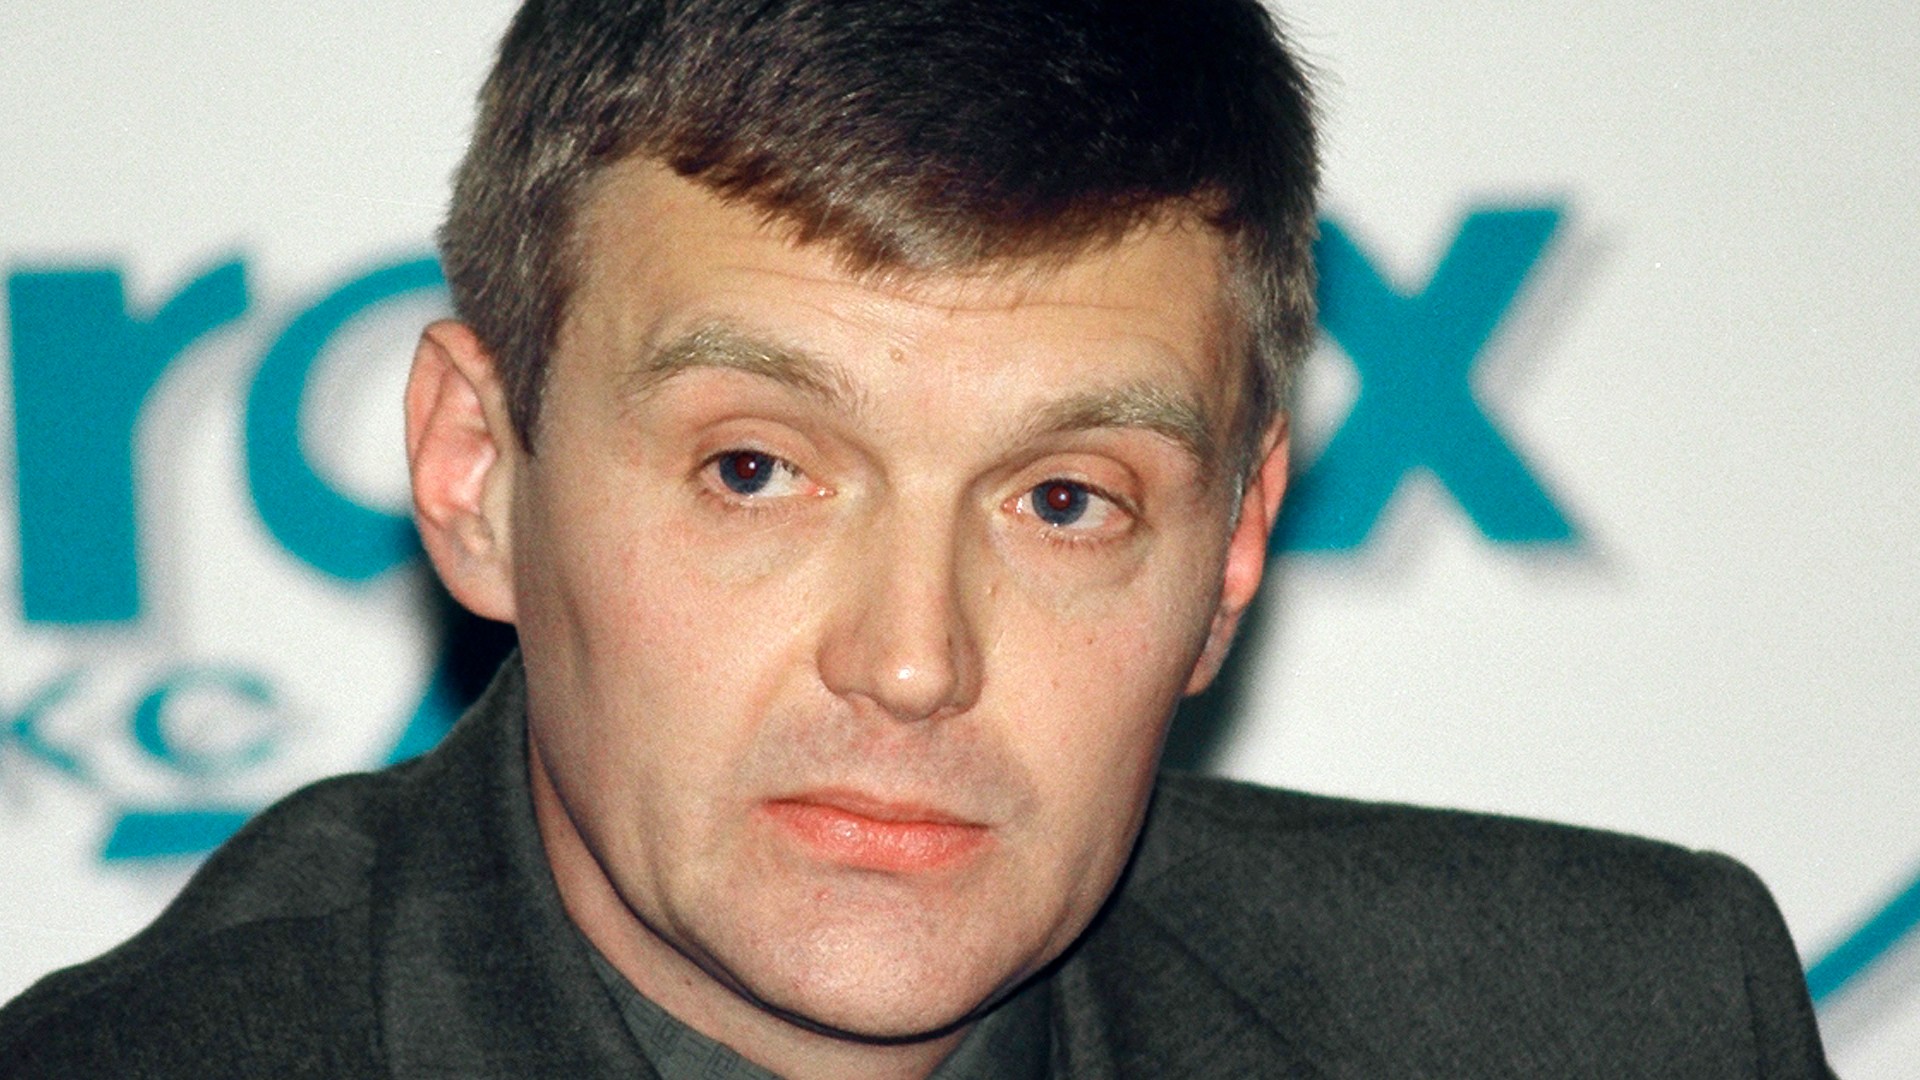 Alexander Litvinenko was poisoned at a hotel in London in 2006